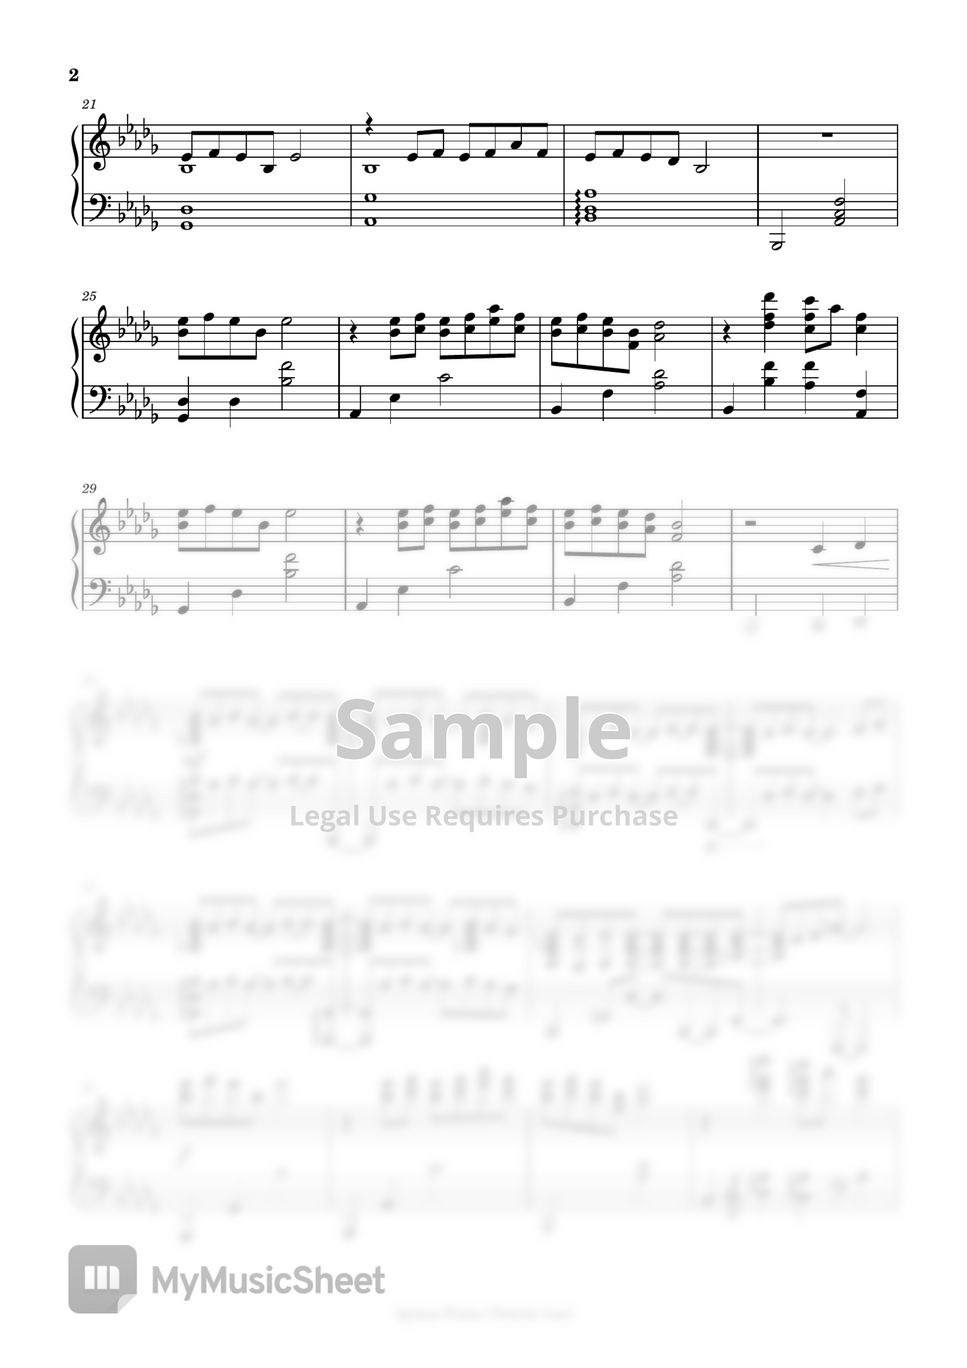 Ryuichi Sakamoto - Merry Christmas,Mr.Lawrence (Piano Solo) by Yulrim Lee